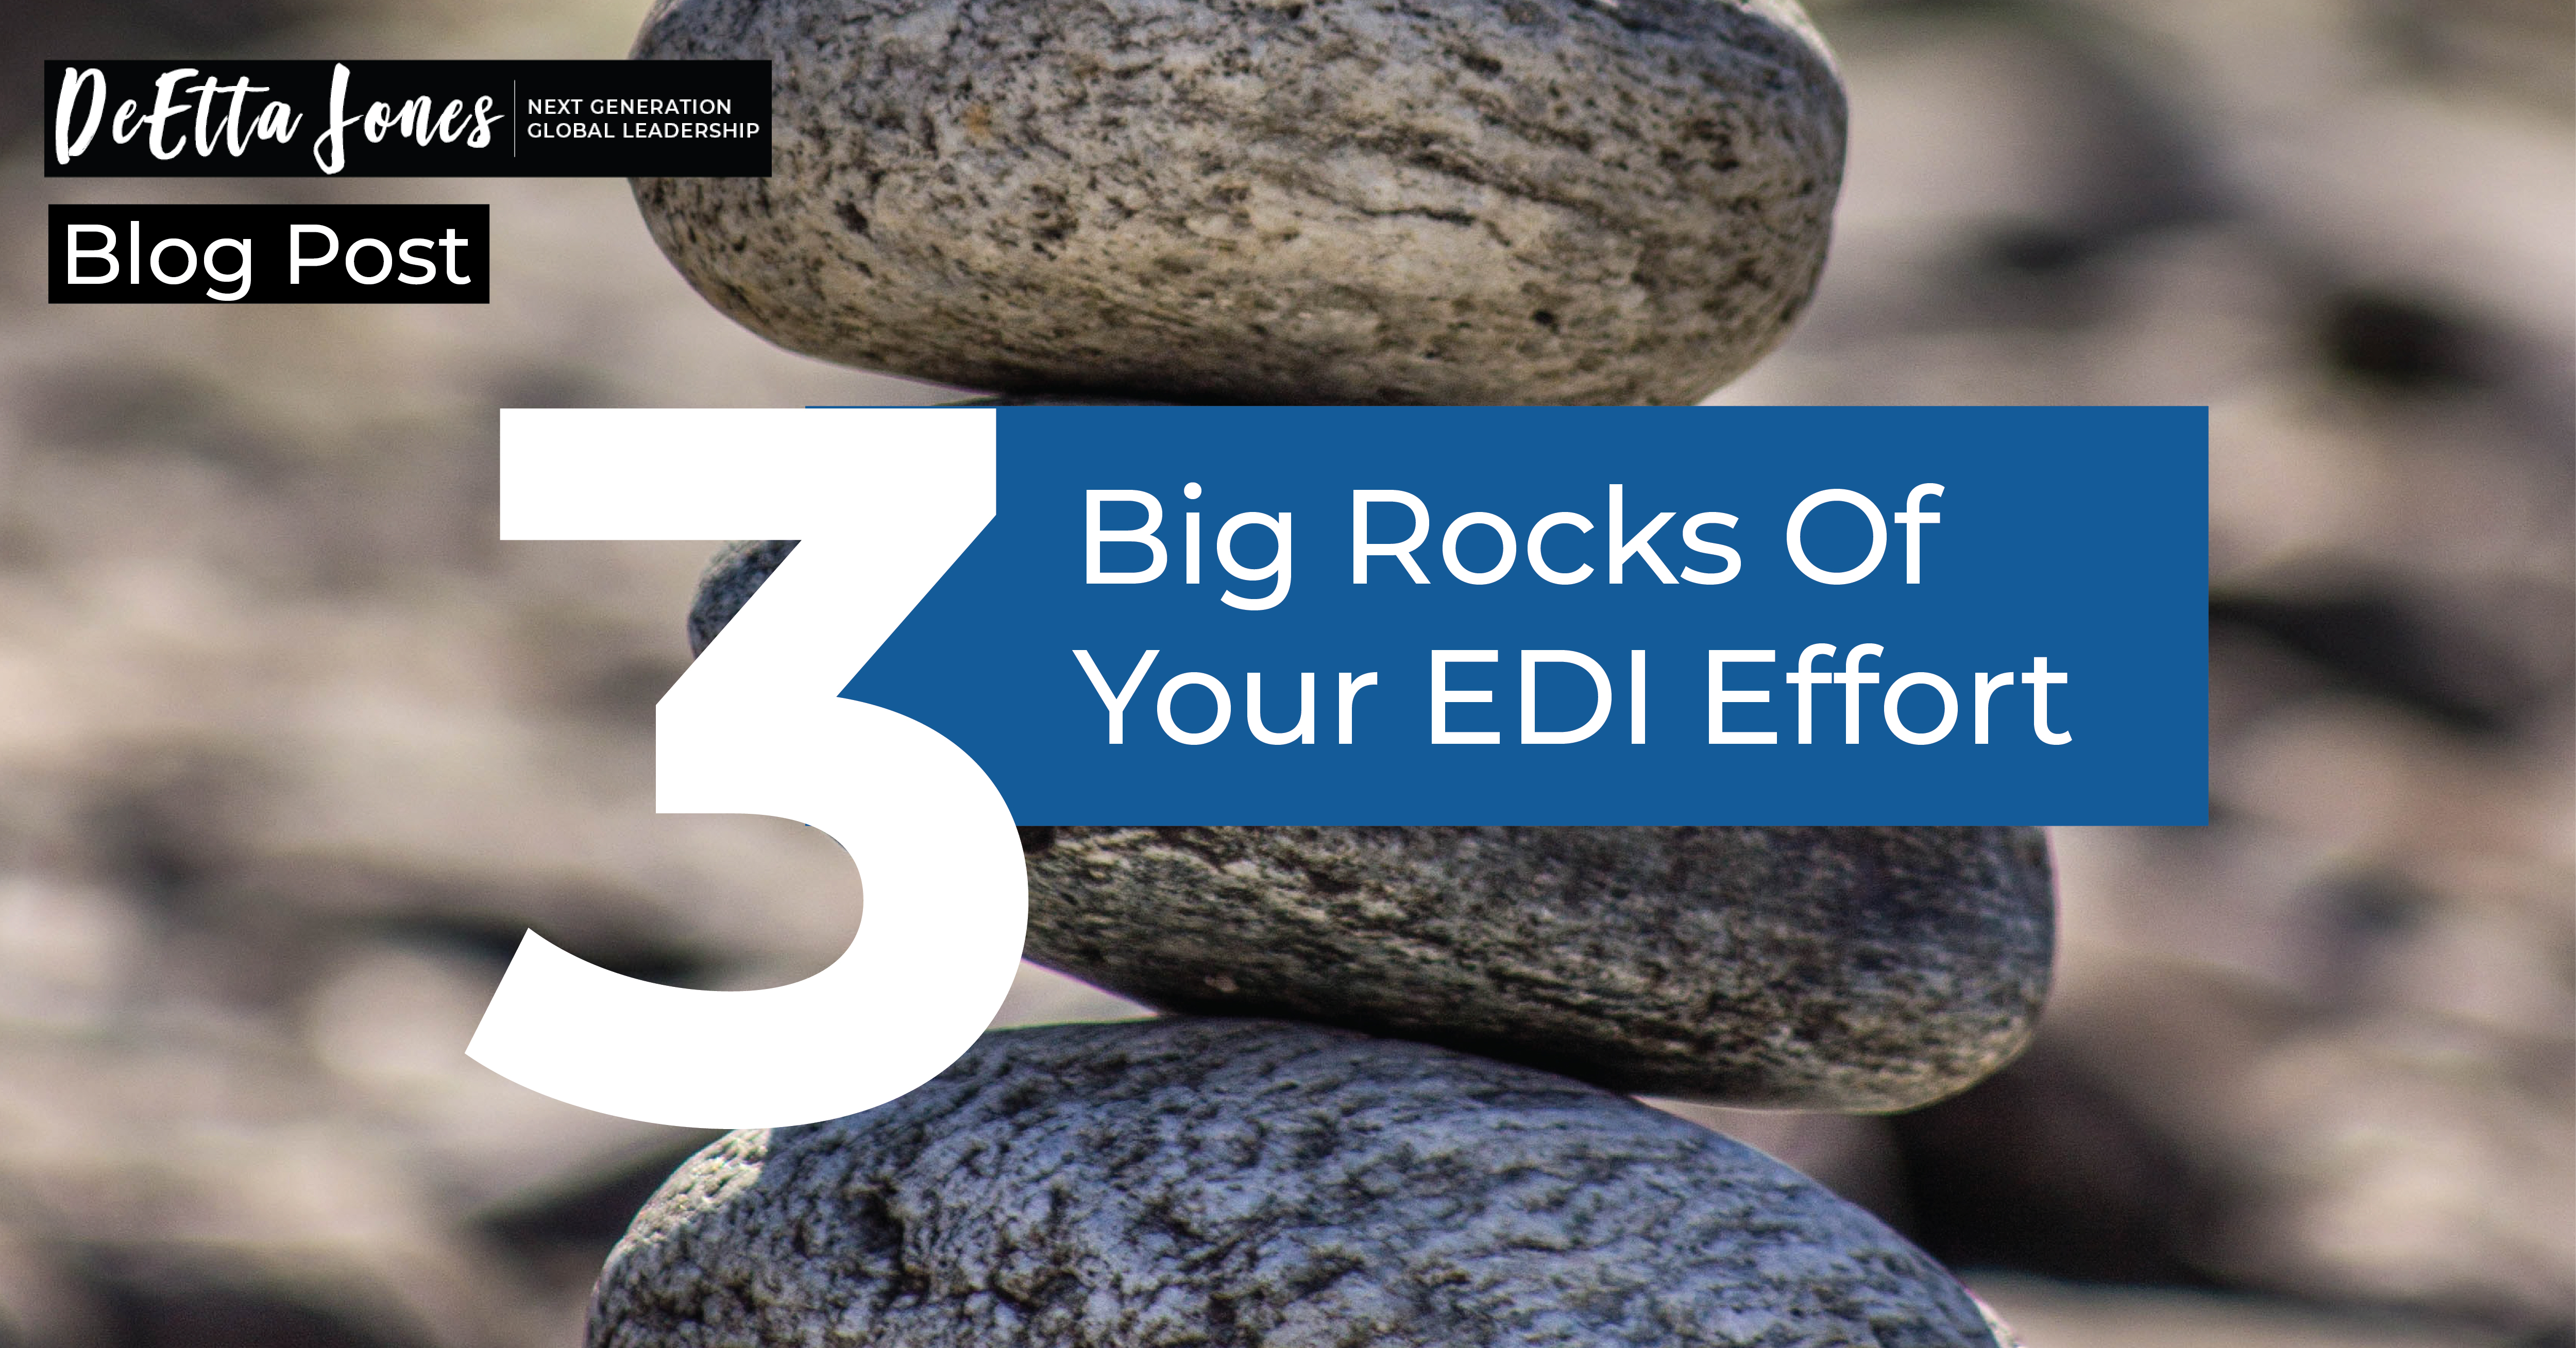 The 3 Big Rocks of Your EDI Effort